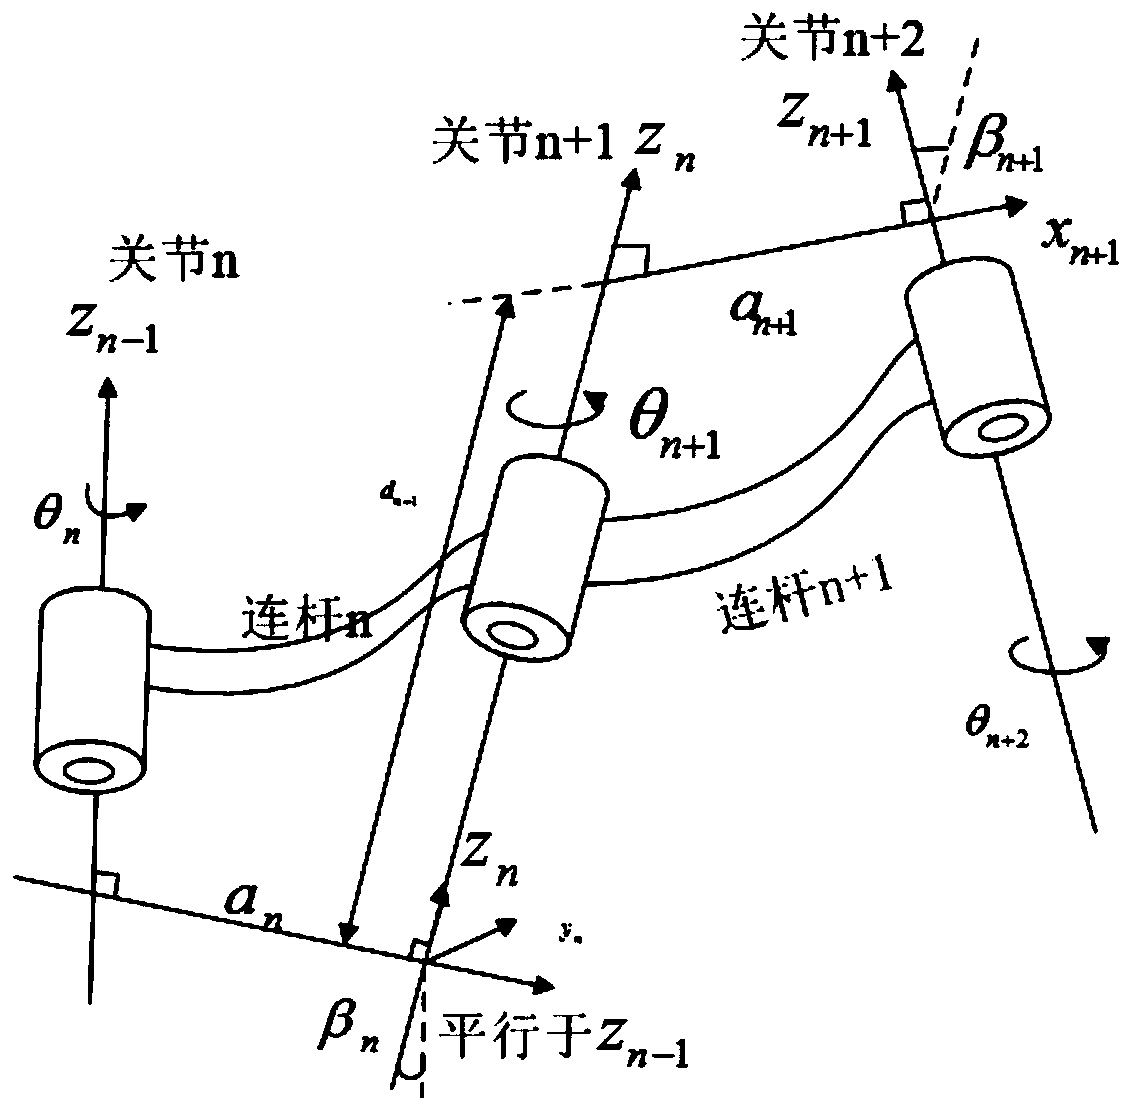 Hybrid optimization algorithm (GA-LM)-based parameter calibration method of articulated arm coordinate measuring machine